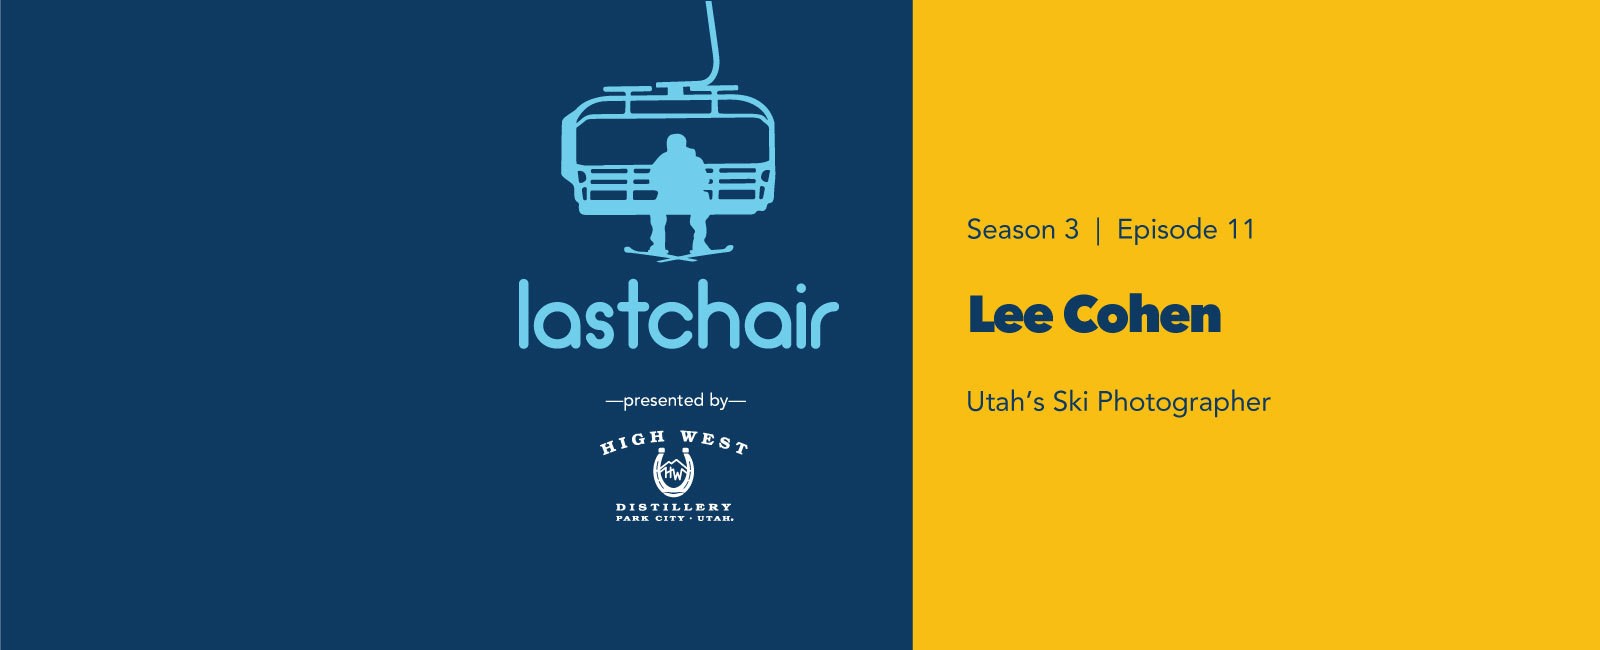 Lee Cohen: Utah's Ski Photographer